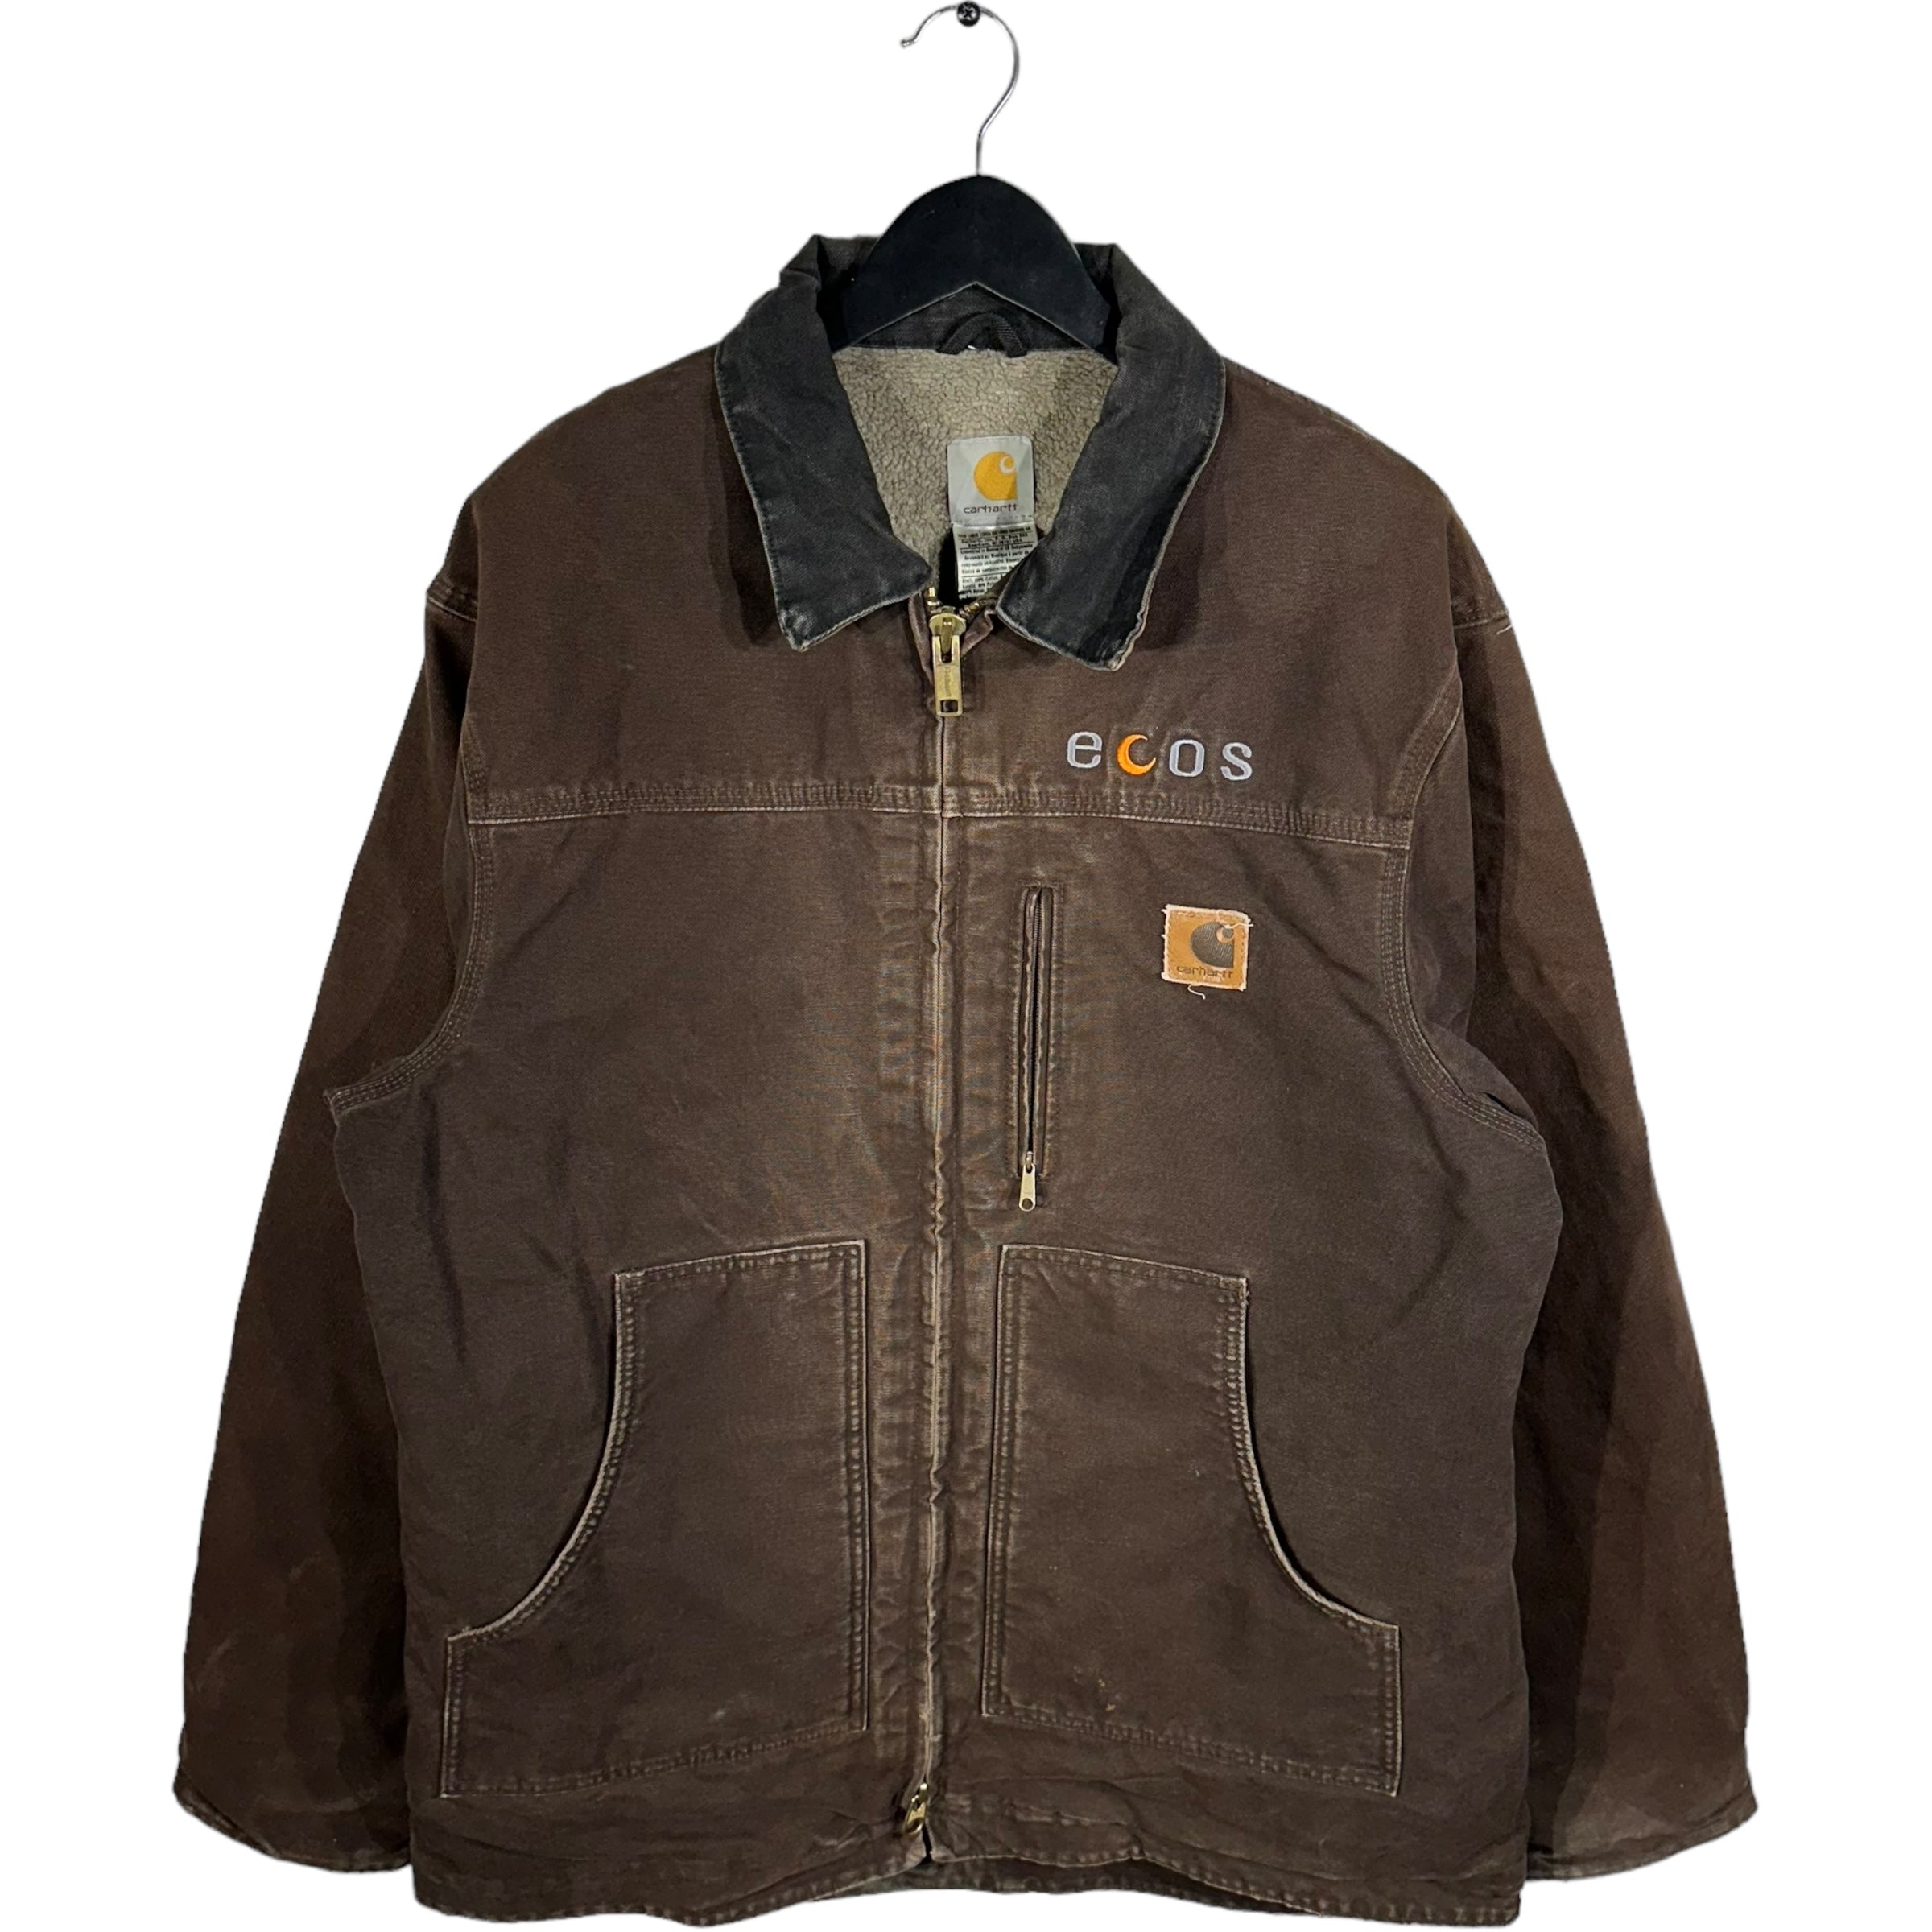 Vintage Carhartt ECOS Sherpa Lined Workwear Jacket